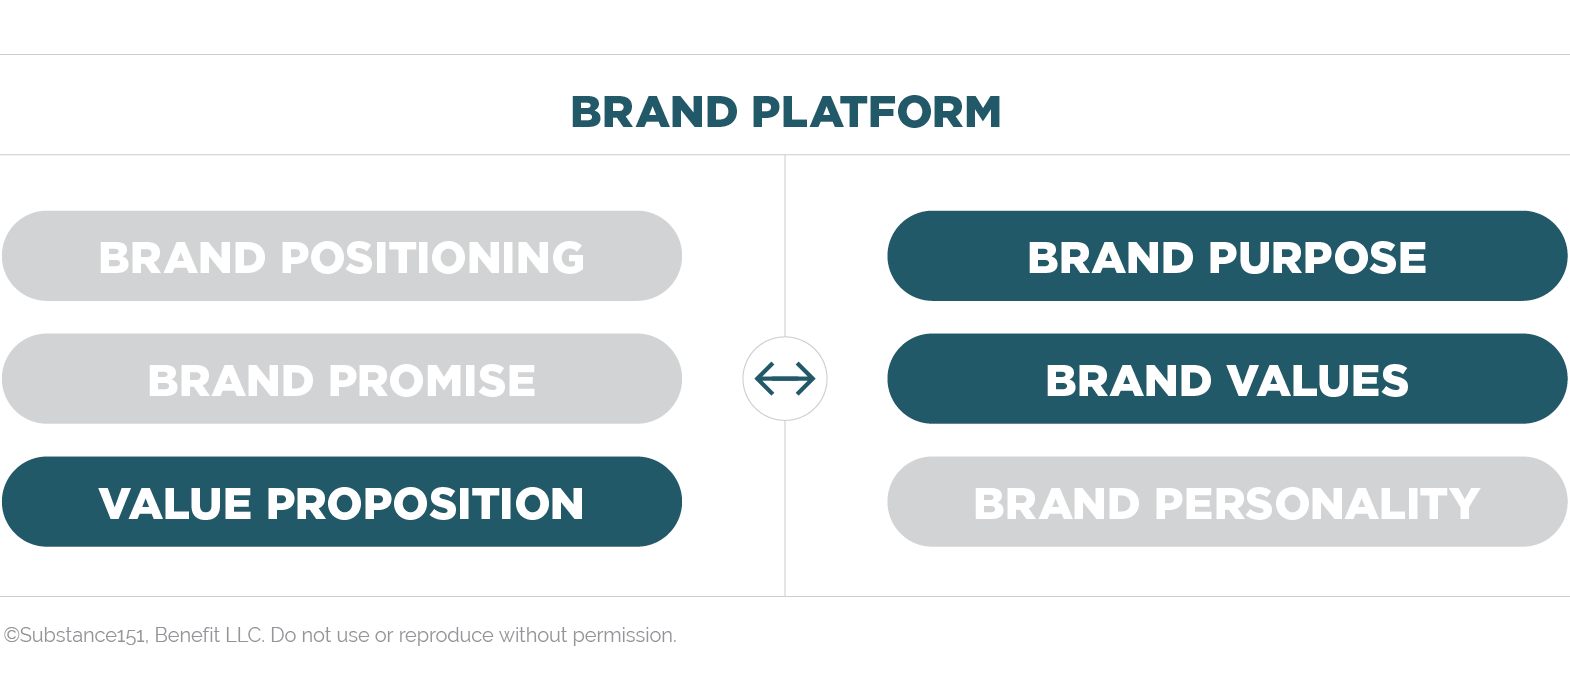 Brand Platform Purpose, Values adn Employee Value Proposition